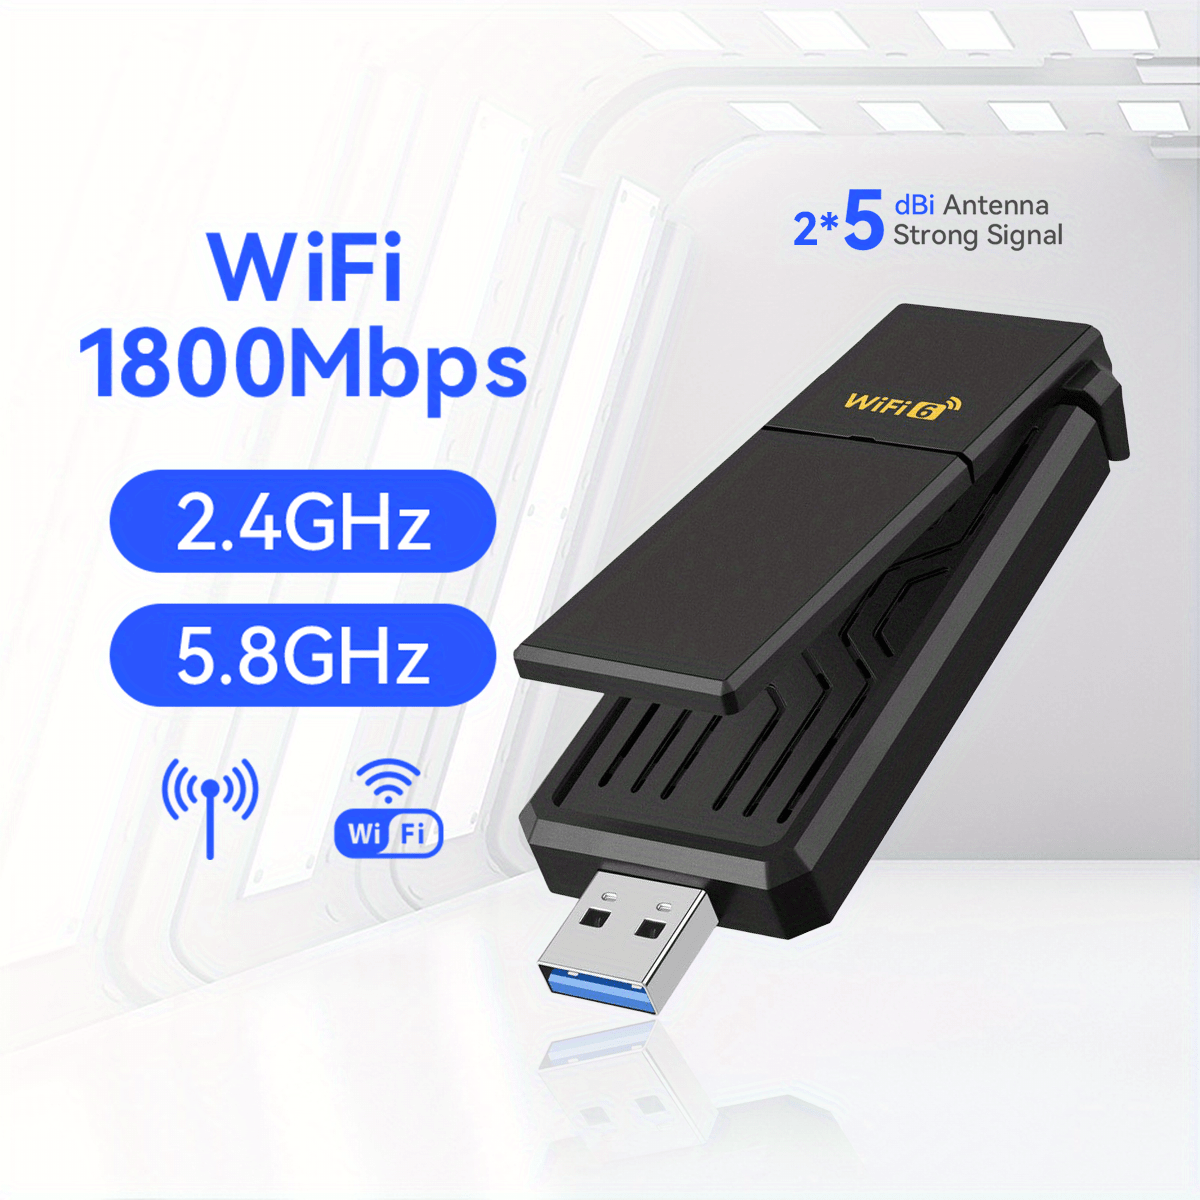 1800Mbps Wireless USB WiFi 6 Adapter for Desktop - 802.11ax USB WiFi  Adapter for Desktop PC Laptop with 5Ghz 2.4Ghz,High Gain 5dBi Antenna  Wireless